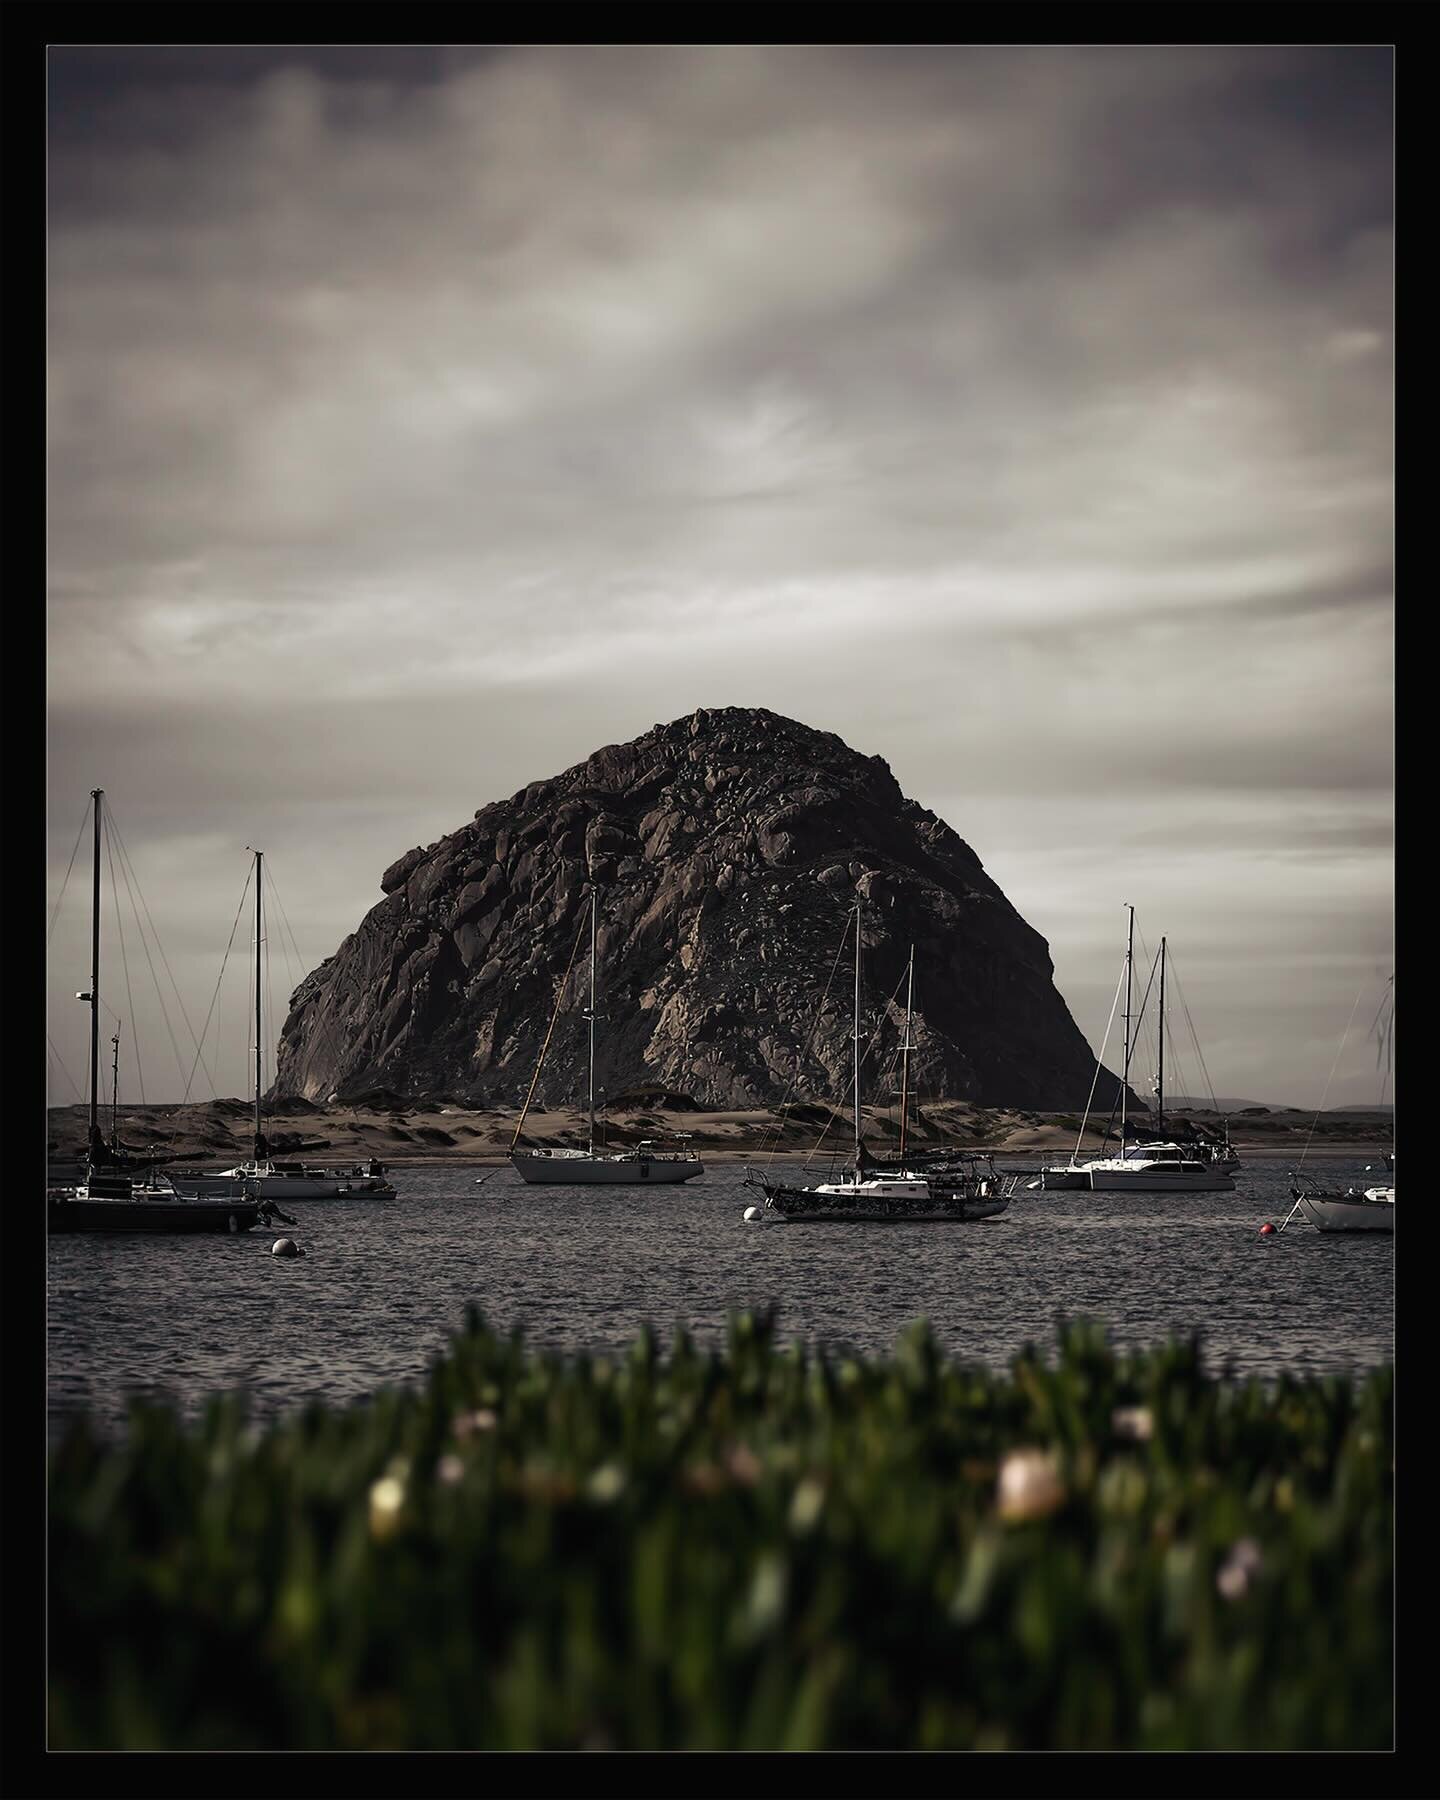 Morro Rock | #morrobay 

Nikon Z7ii
Nikkor 80-400mm f/4.5-5.6

#morrorock #cencal #centralcalifornia #centralcoast #moodyedits #agameoftones #nikonz7ii #californialove #visitcalifornia #californialesstraveled #rawcalifornia #wanderout #morrobayca #mo